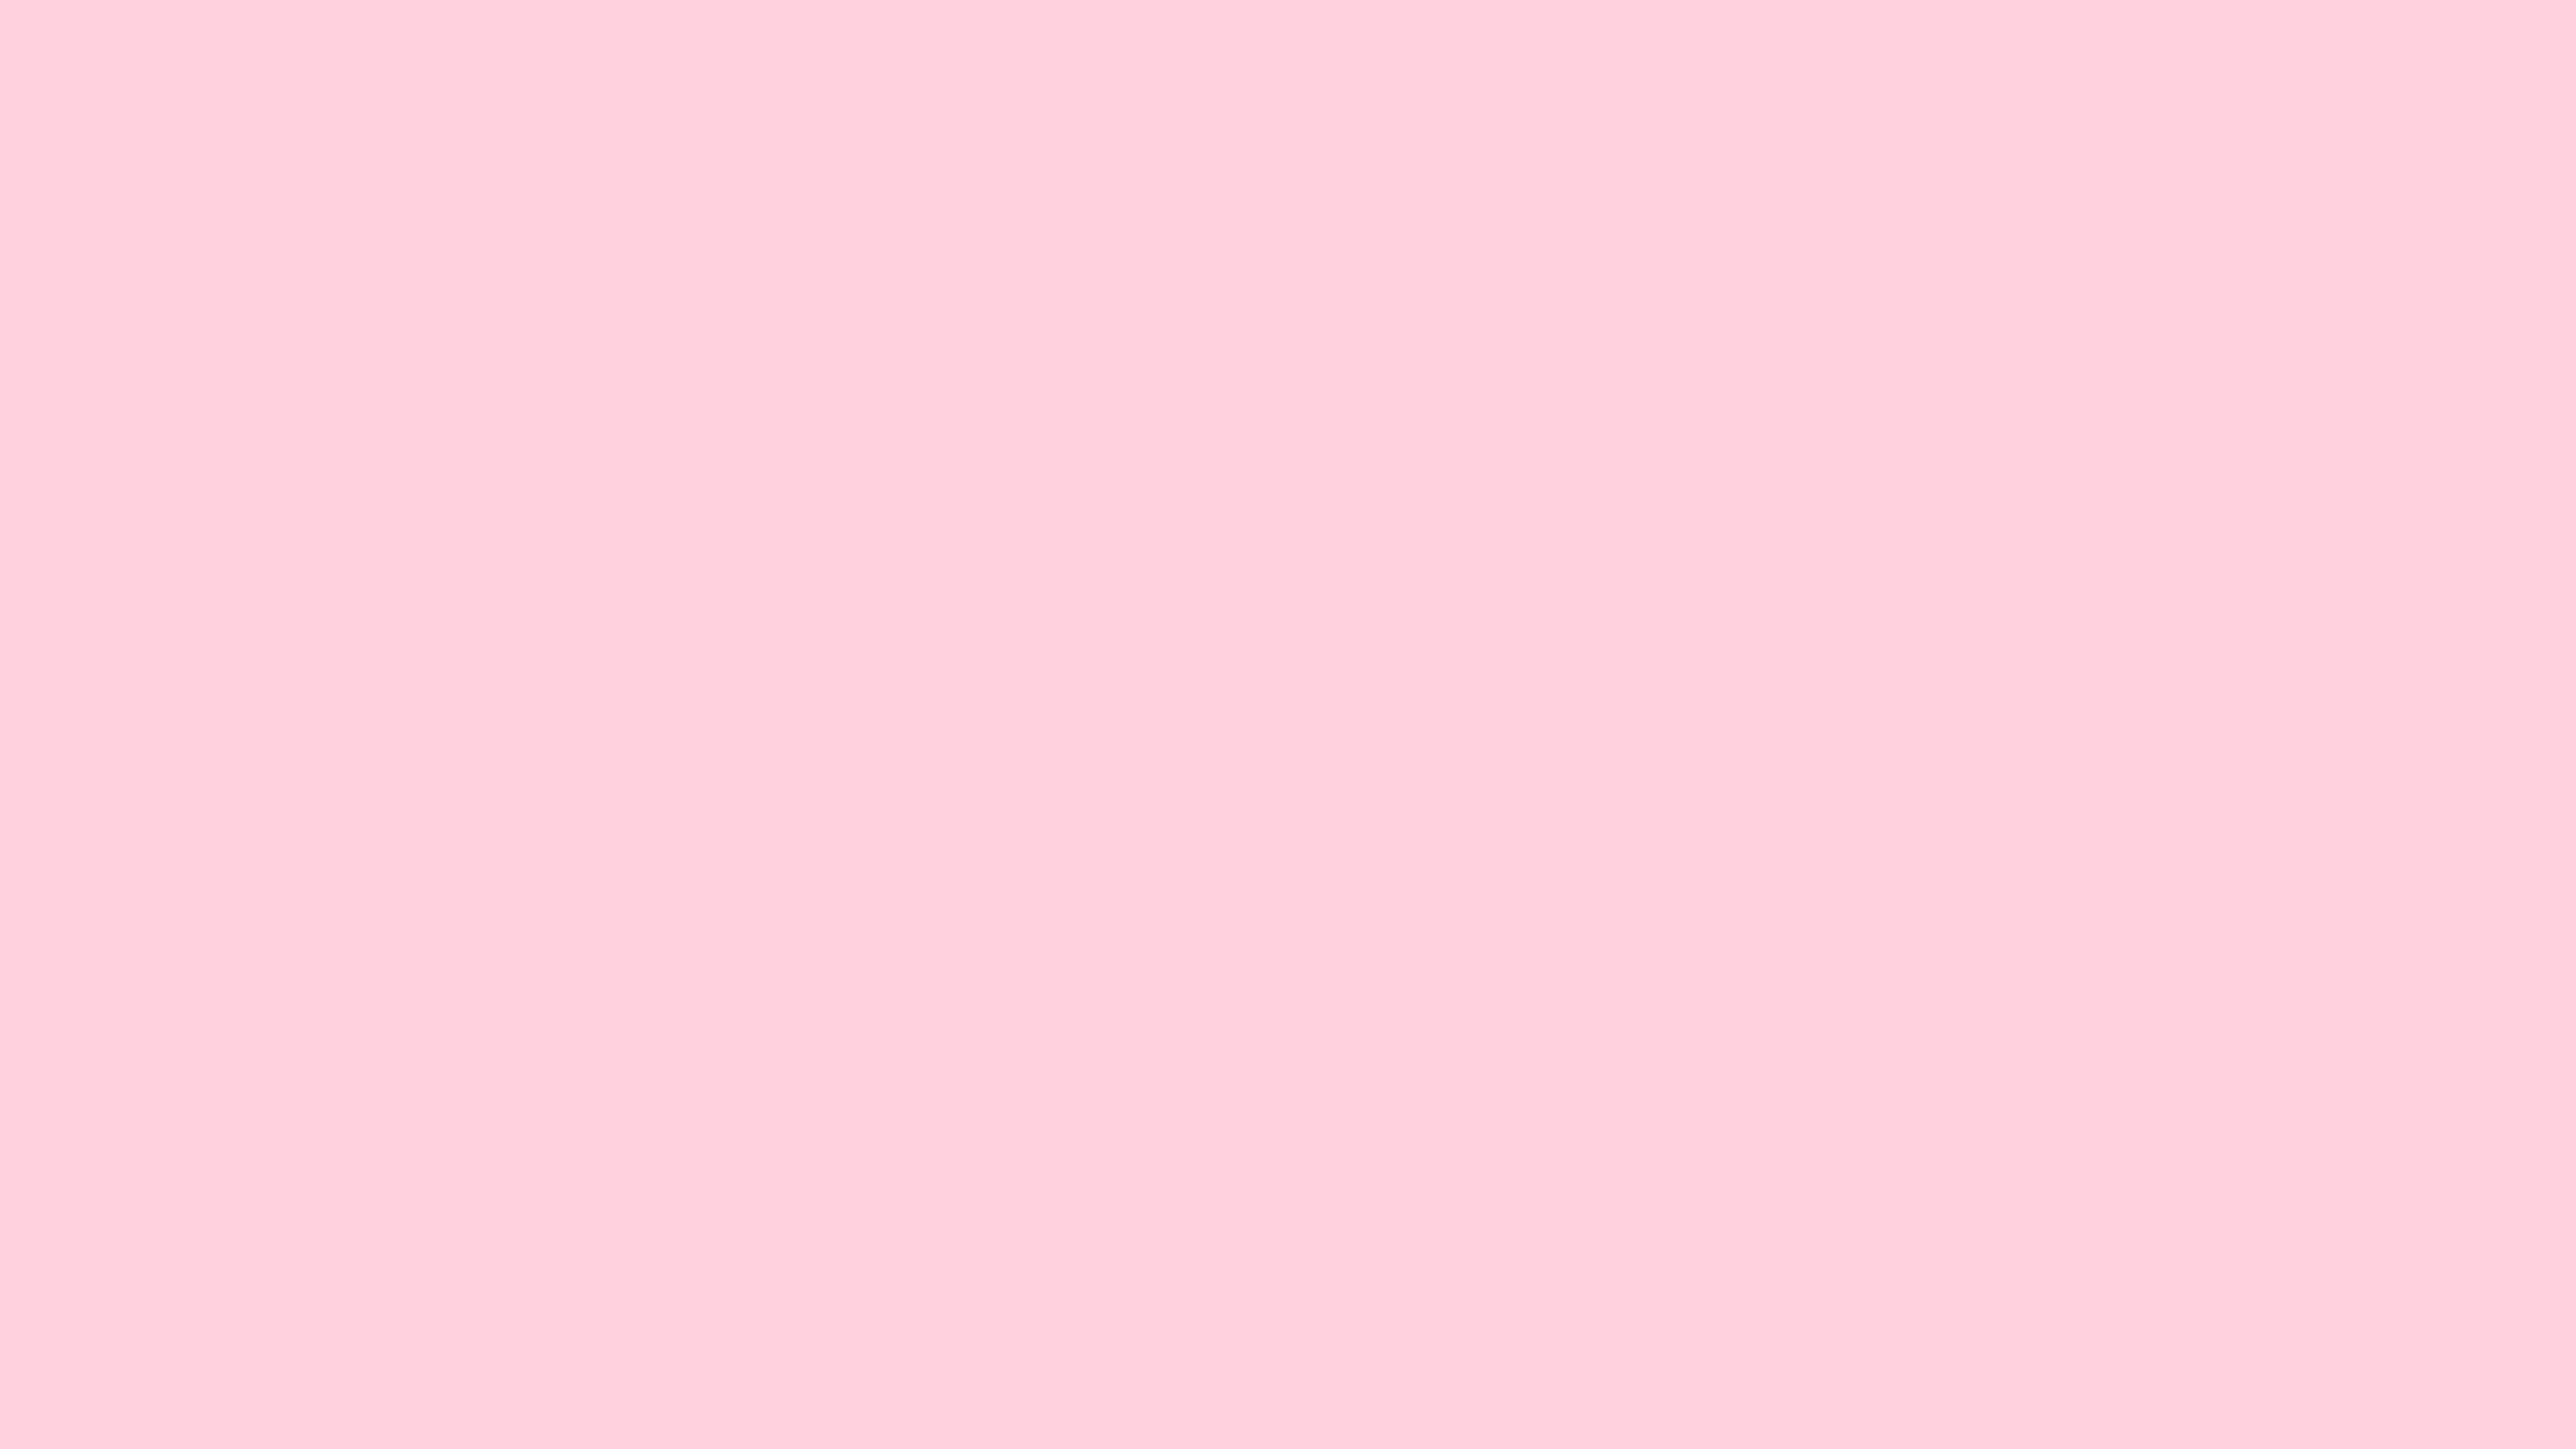 Light Pink Solid Color Background Image Free Image Generator